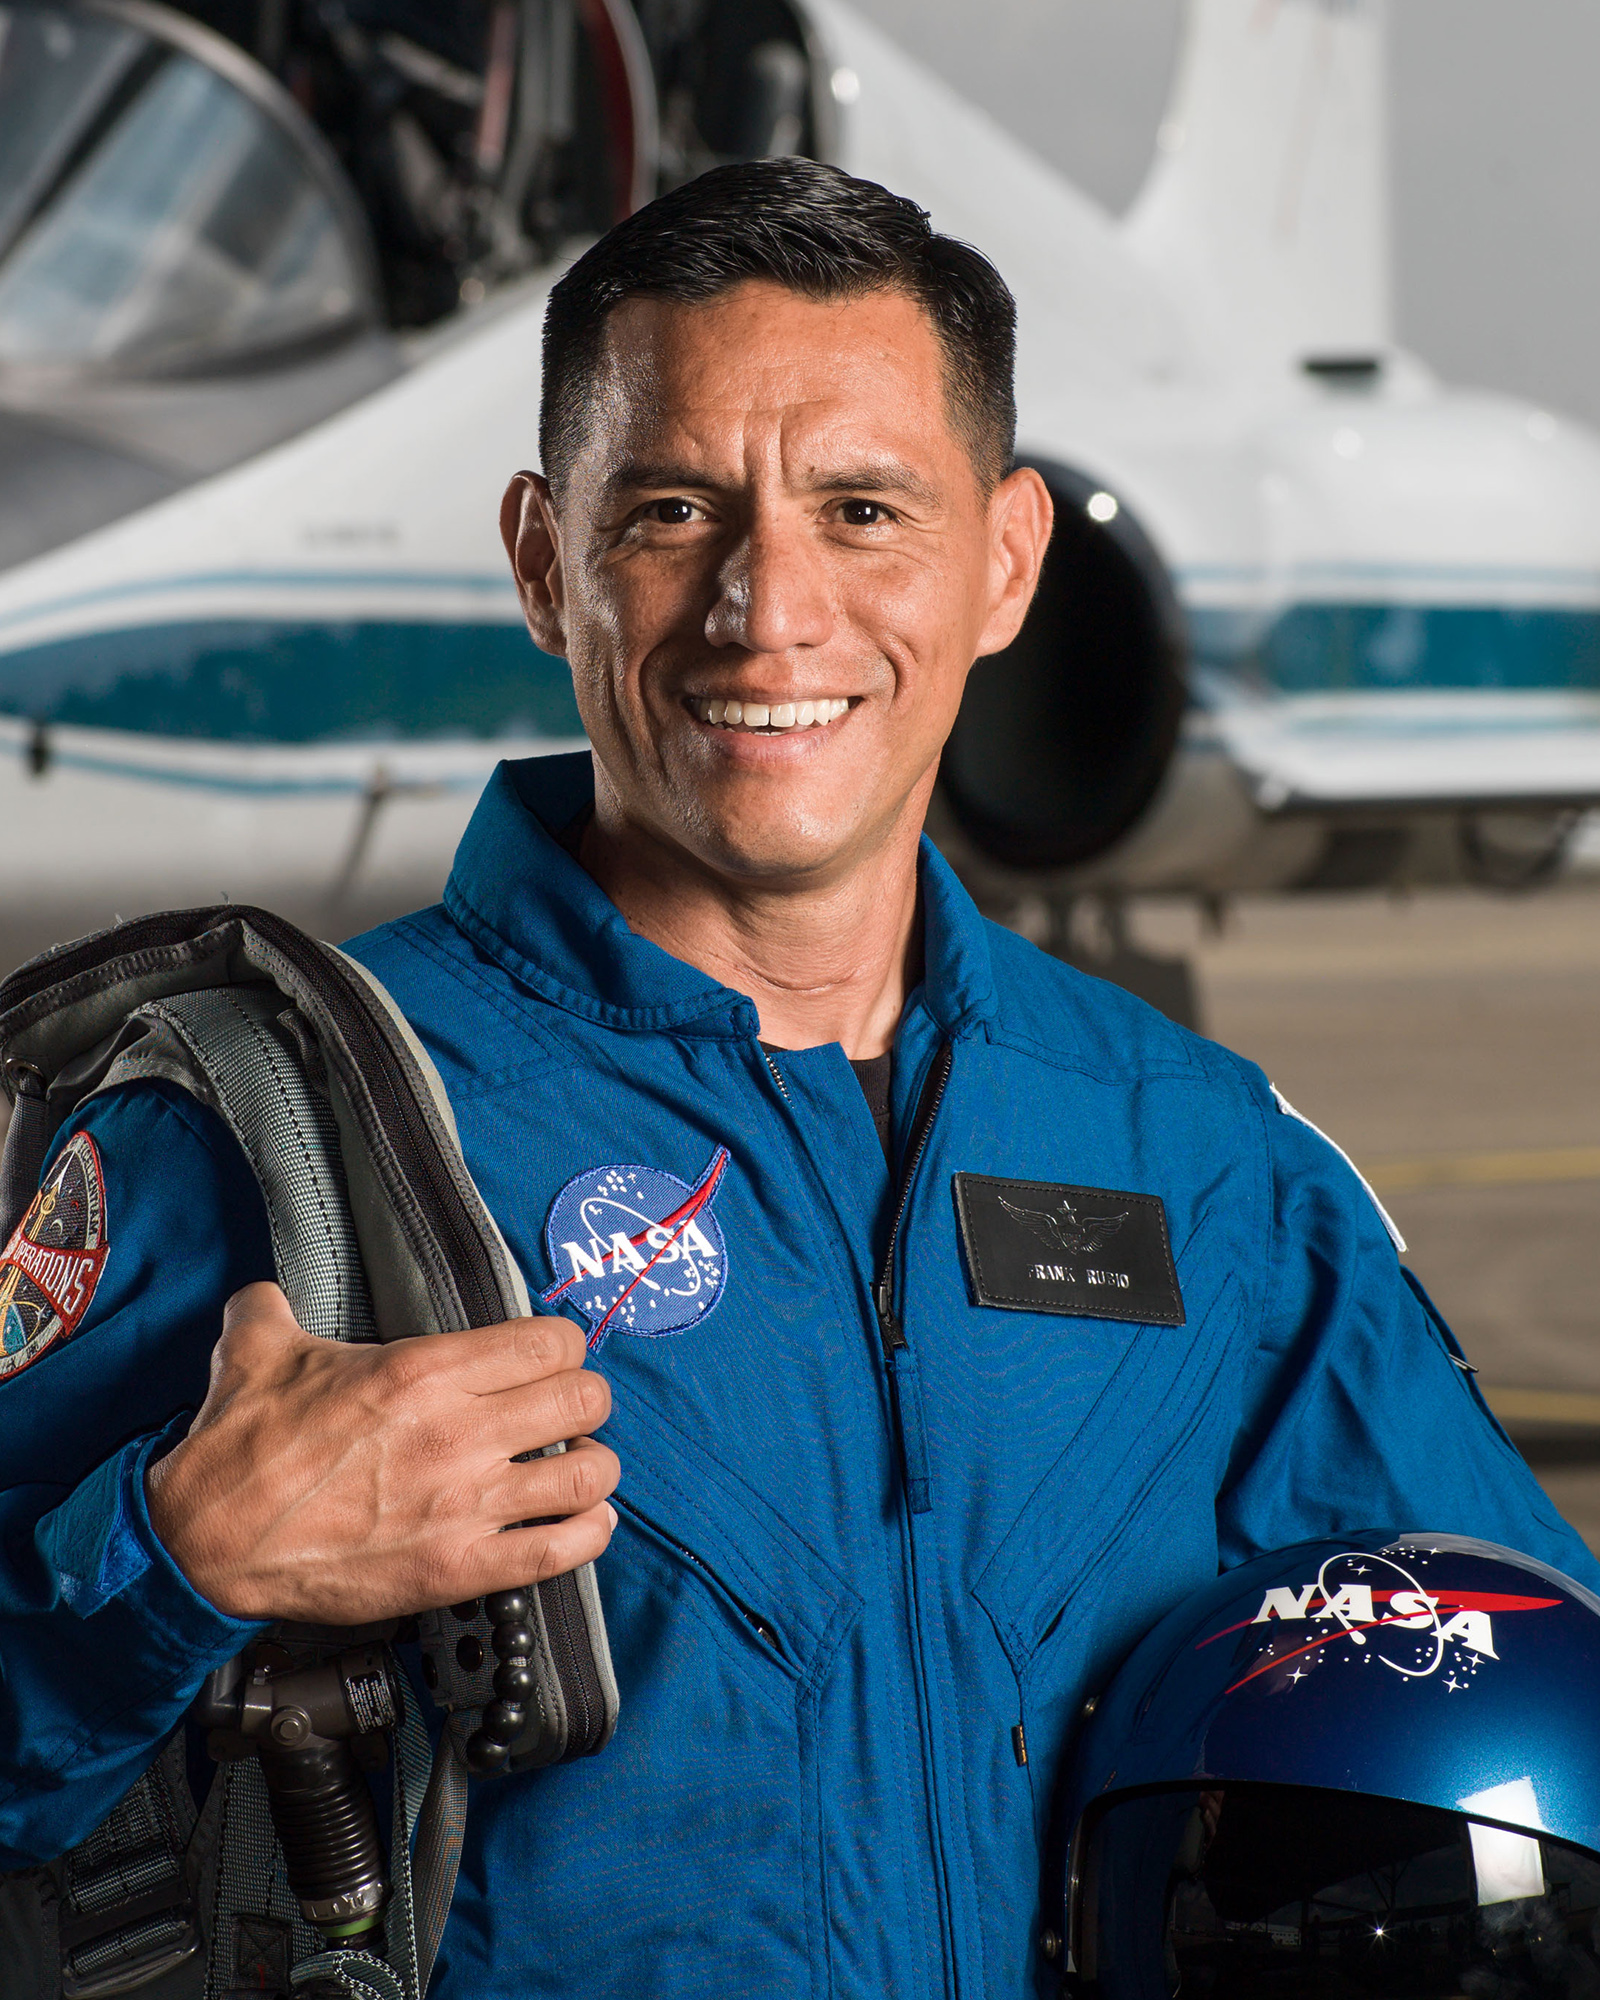 Lt. Col. Frank Rubio, NASA Army astronaut candidate